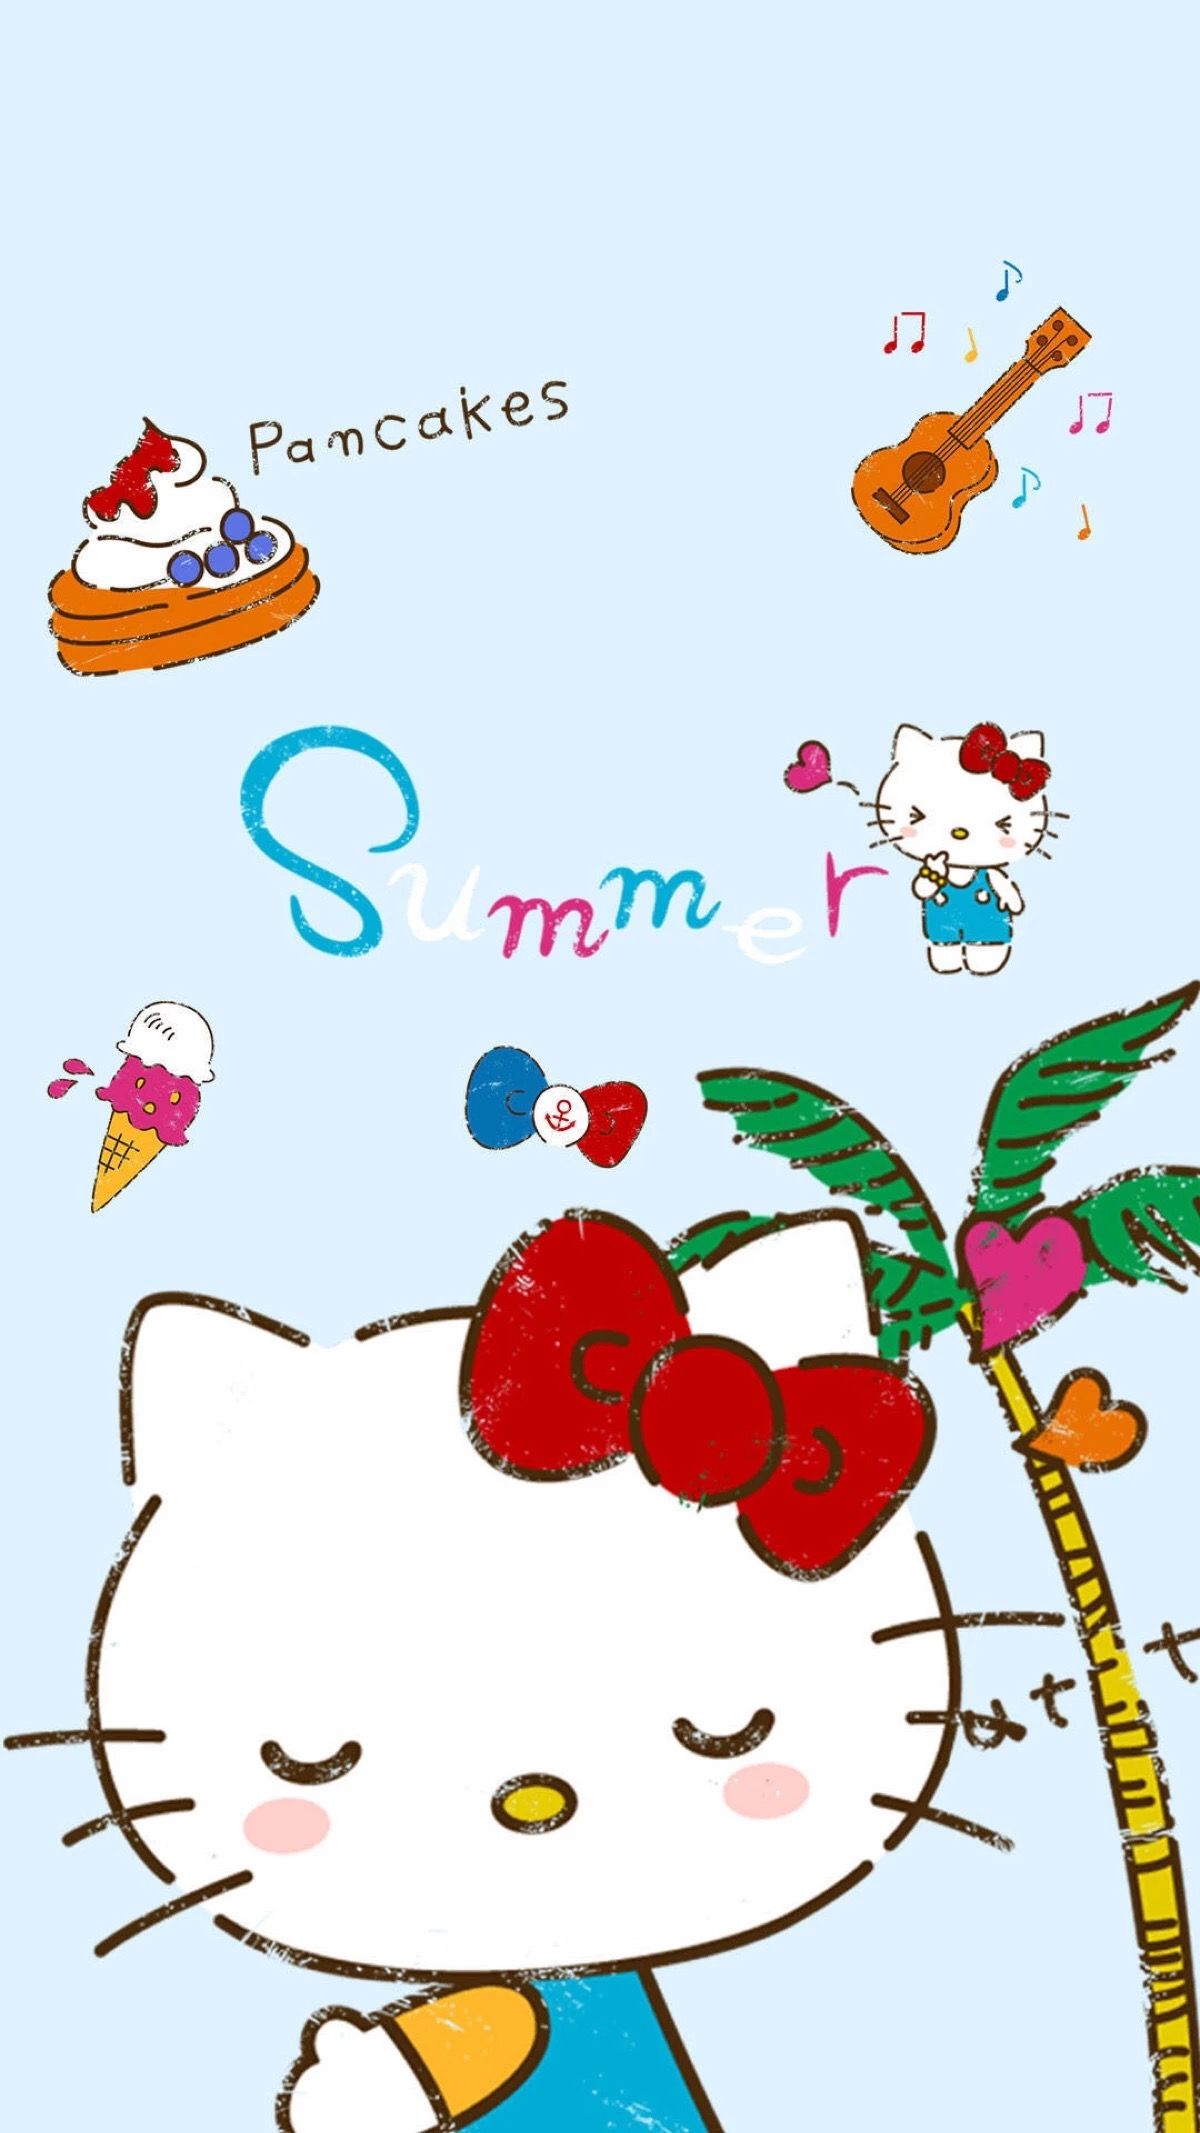 Background Hello Kitty Wallpaper